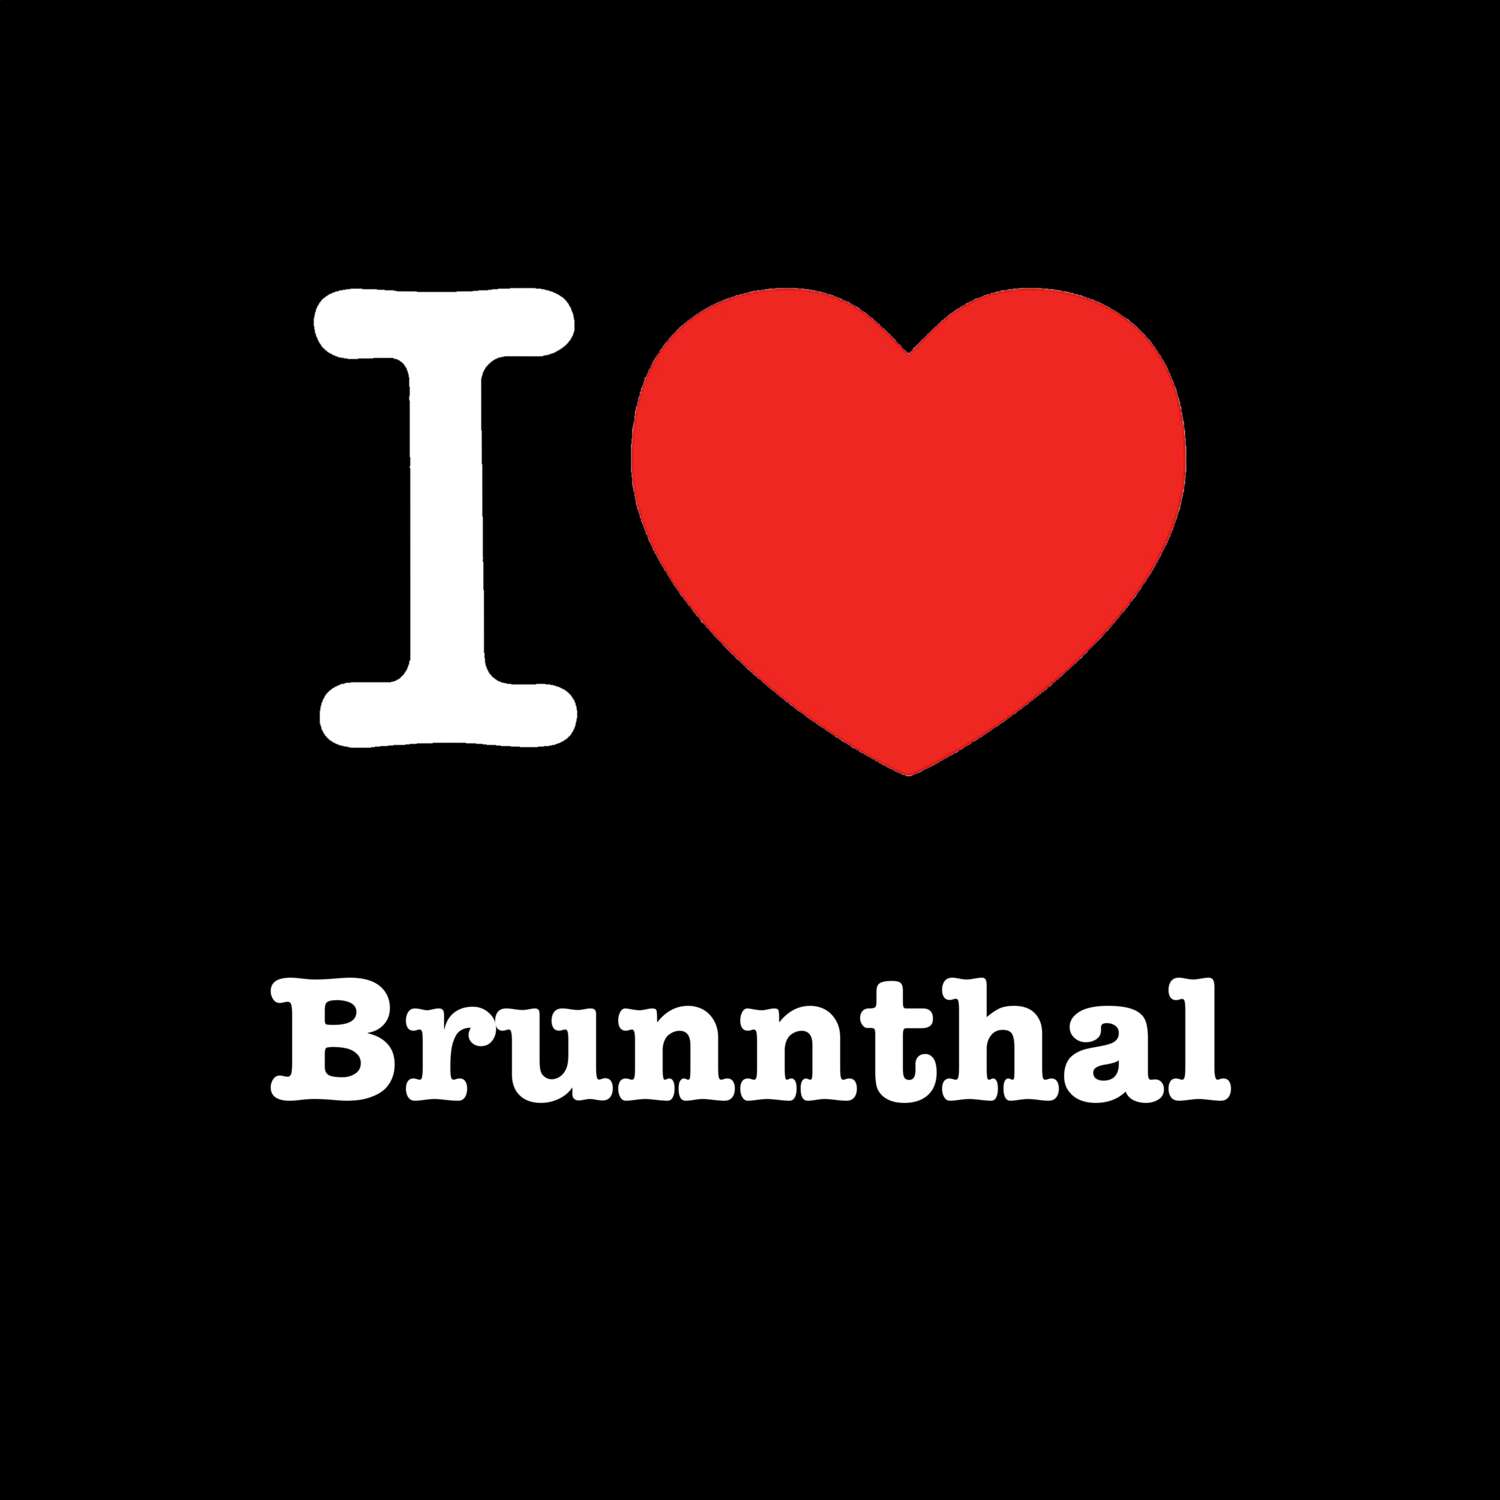 Brunnthal T-Shirt »I love«